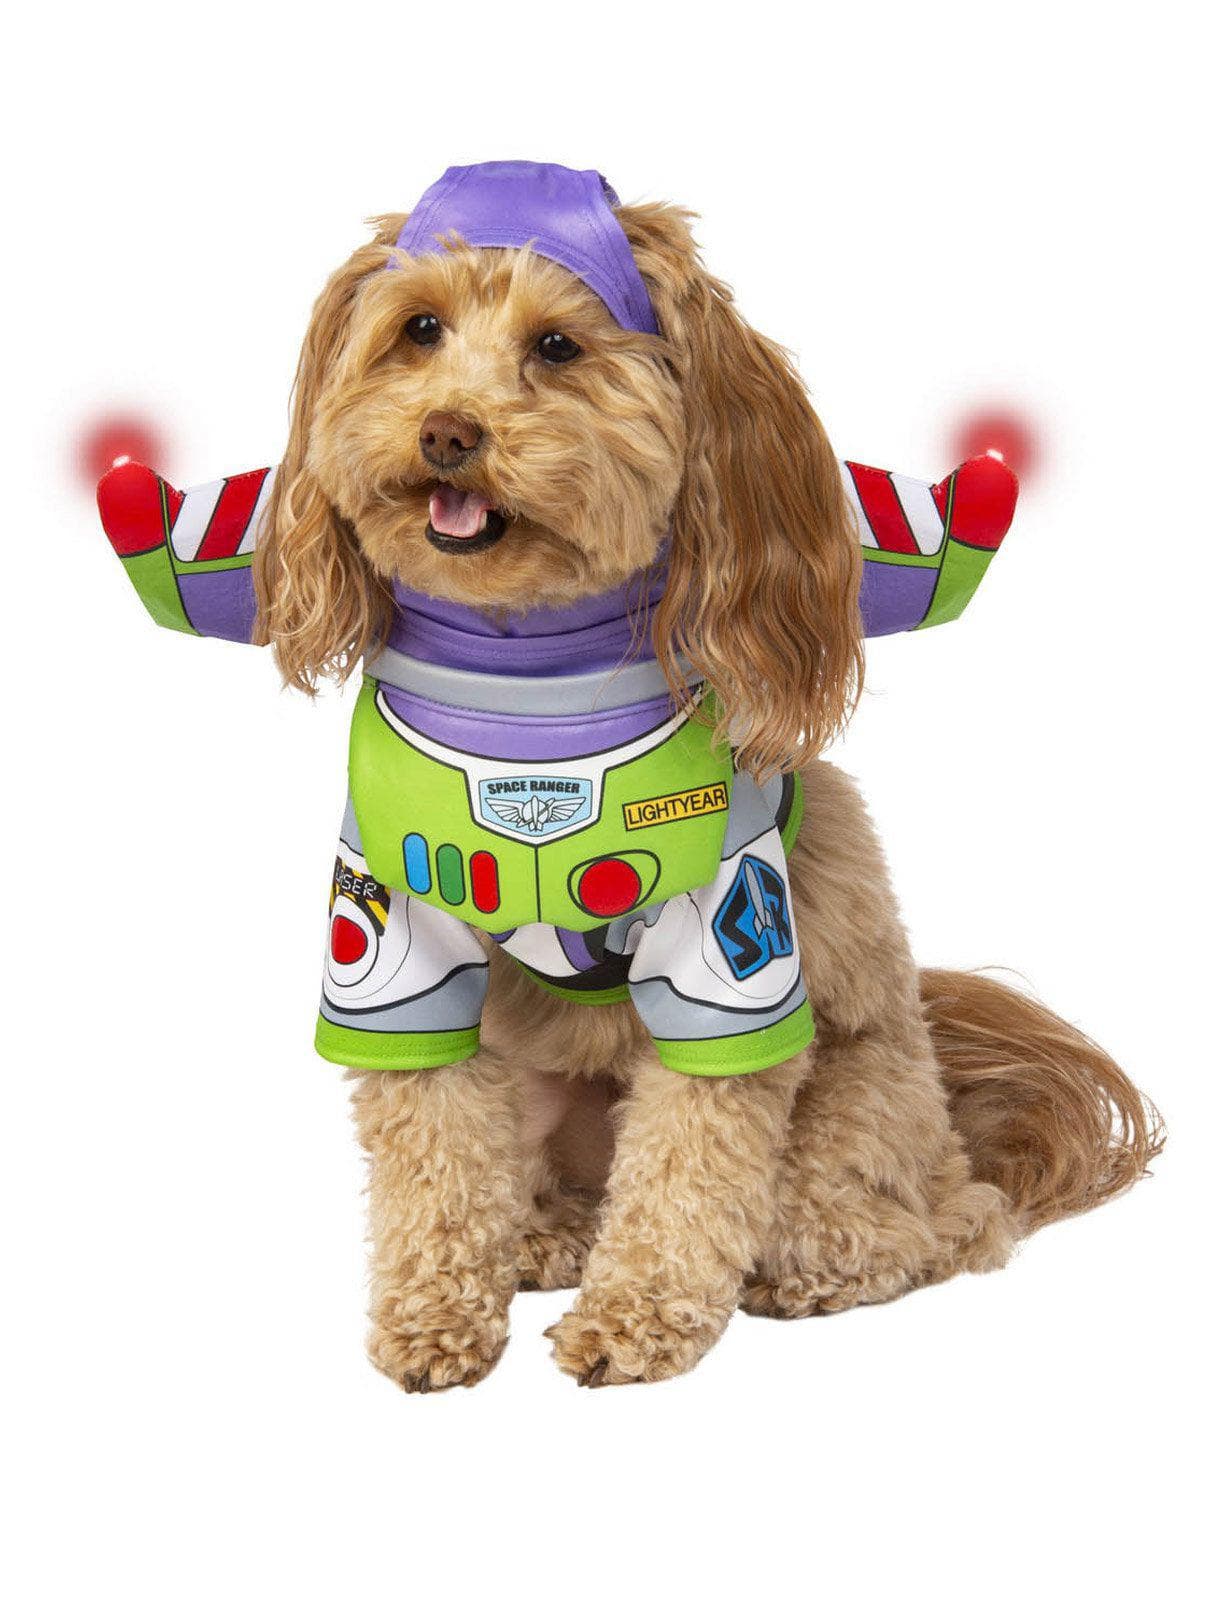 Toy Story Buzz Lightyear Pet Costume - Light Up - costumes.com